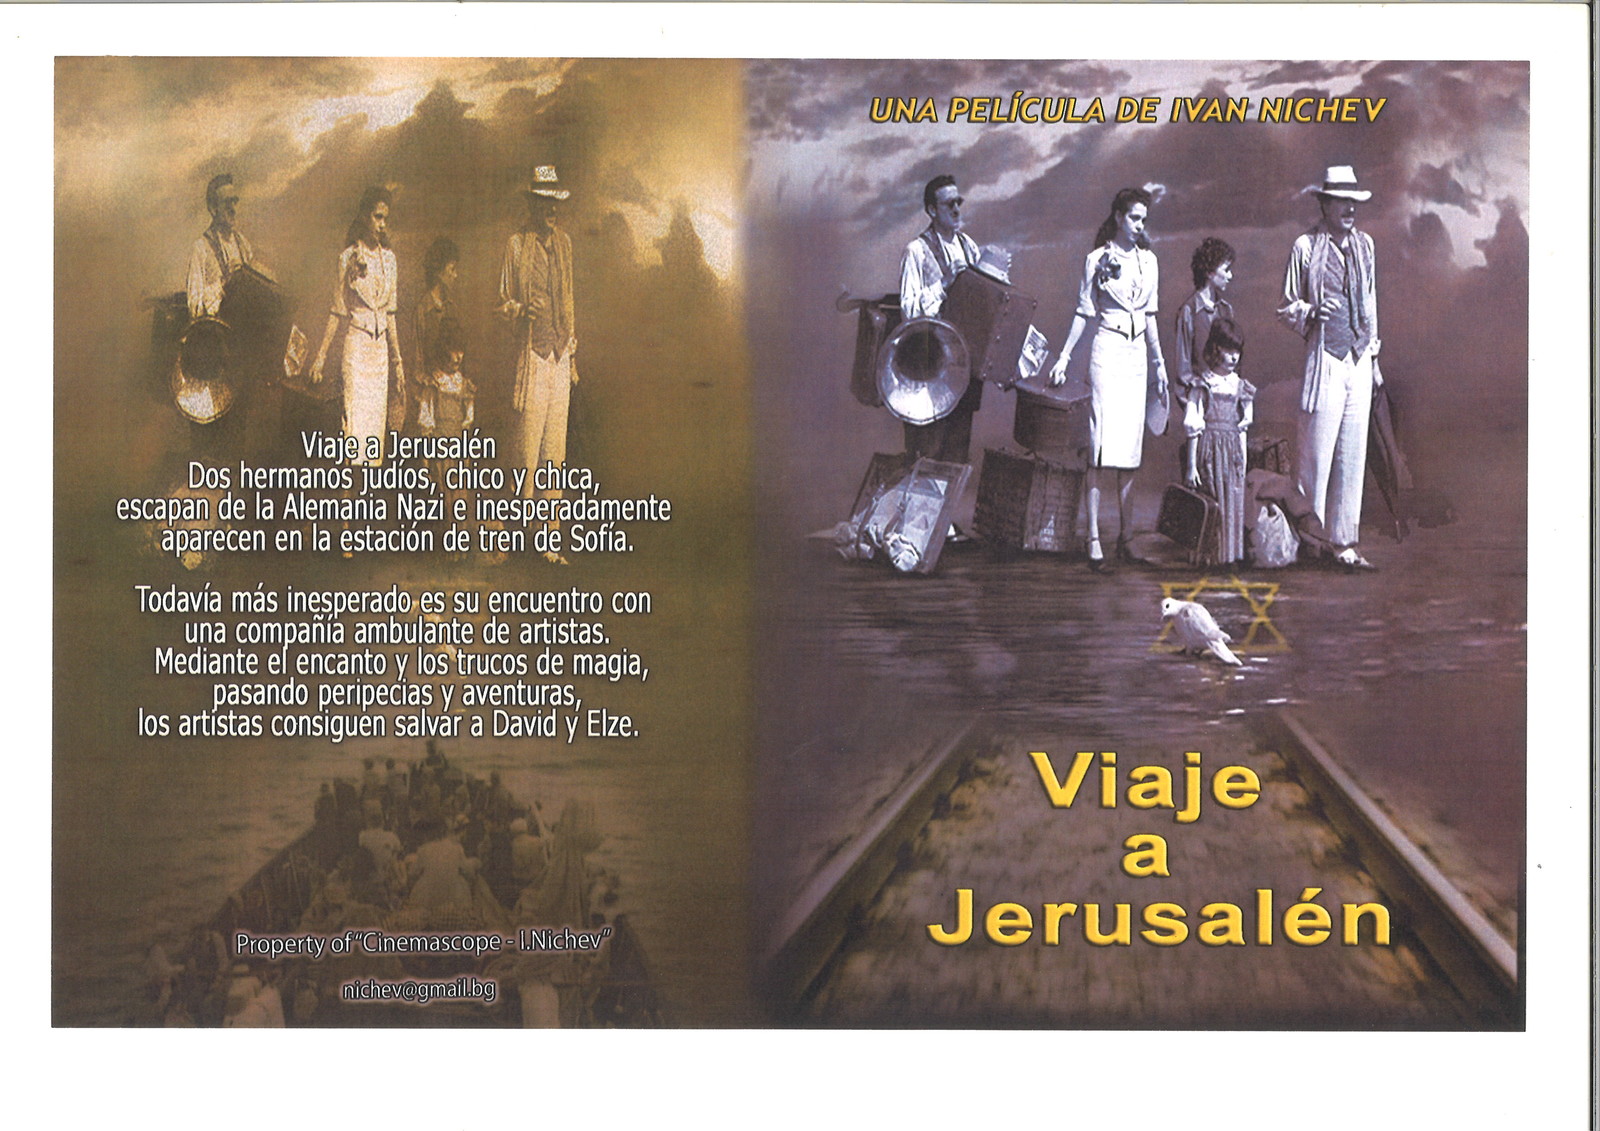 Journey to Jerusalem movie streaming online in Argentina